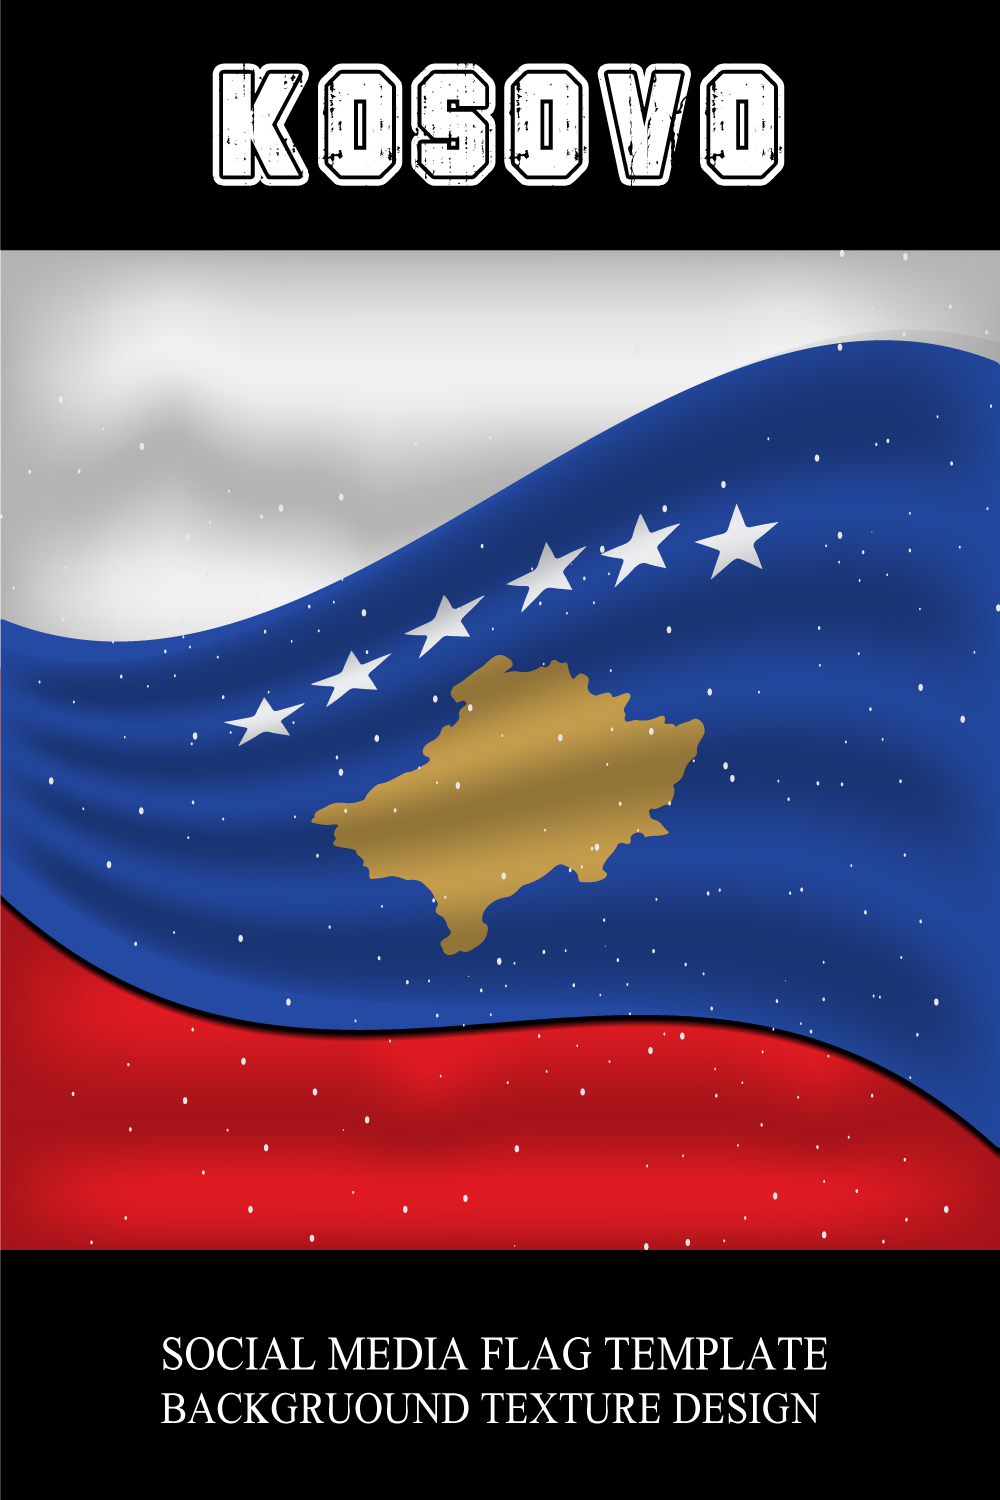 Irresistible image of the flag of Kosovo.